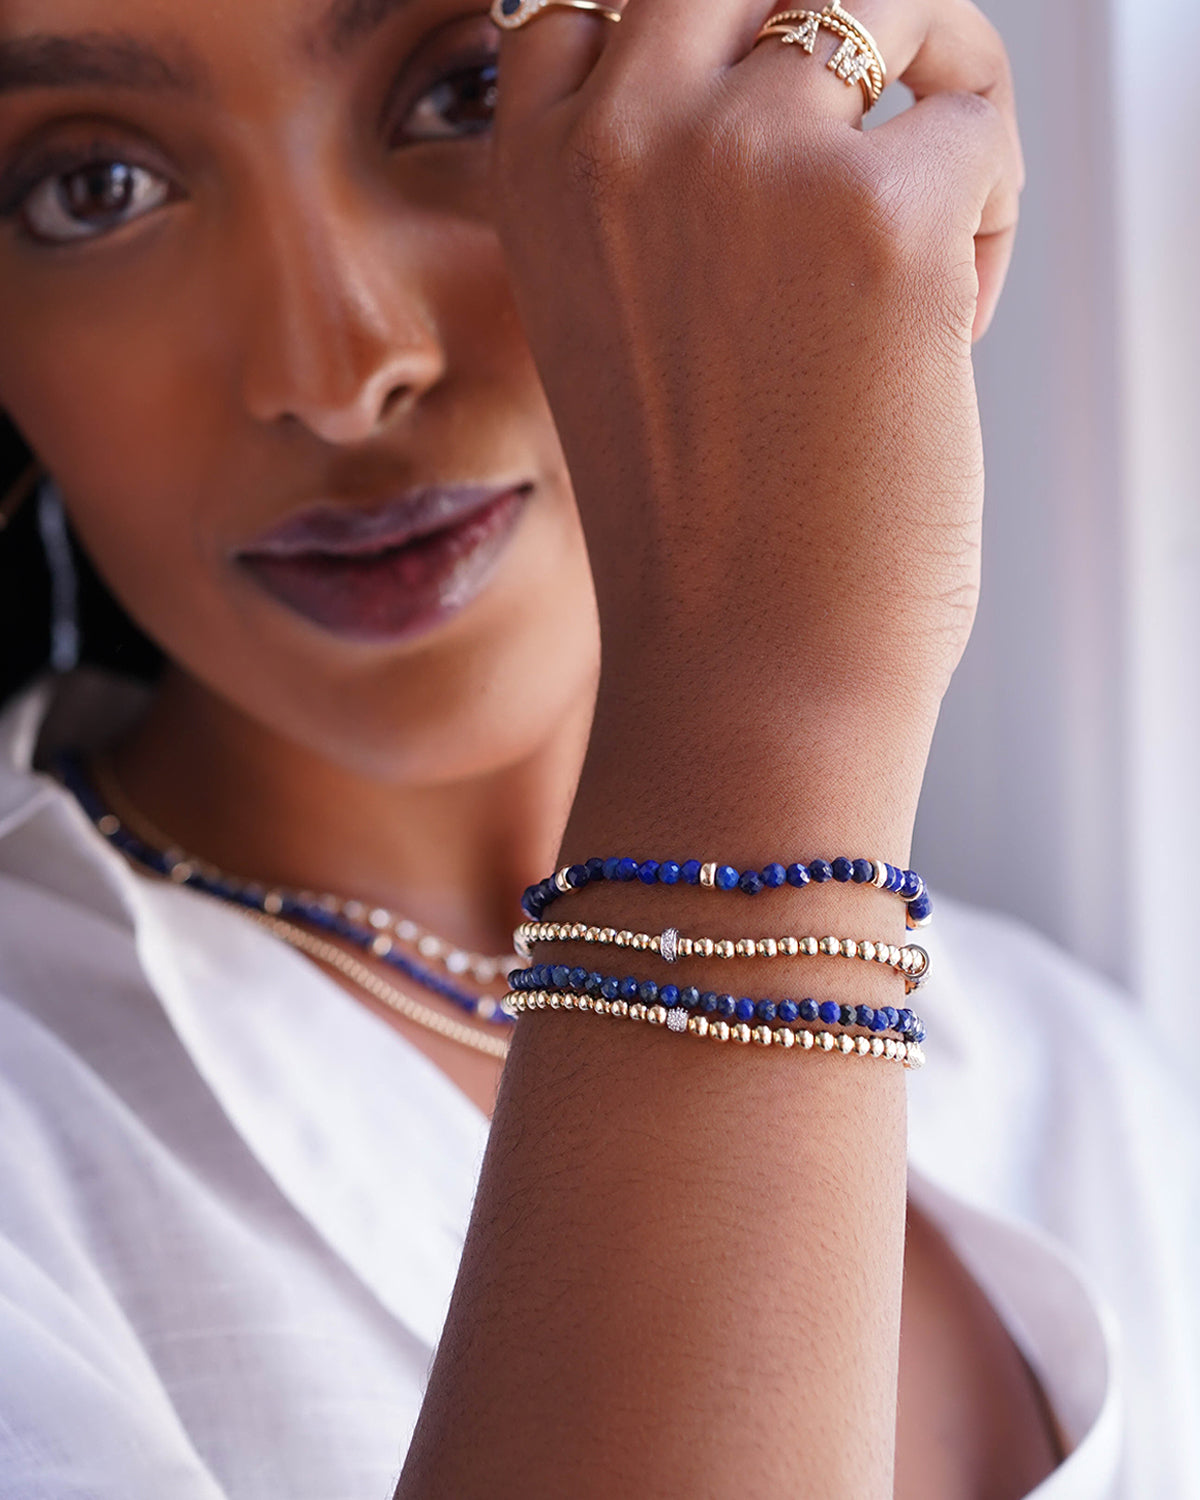 14K Gold Blue Lapis Segment Bead Bracelet